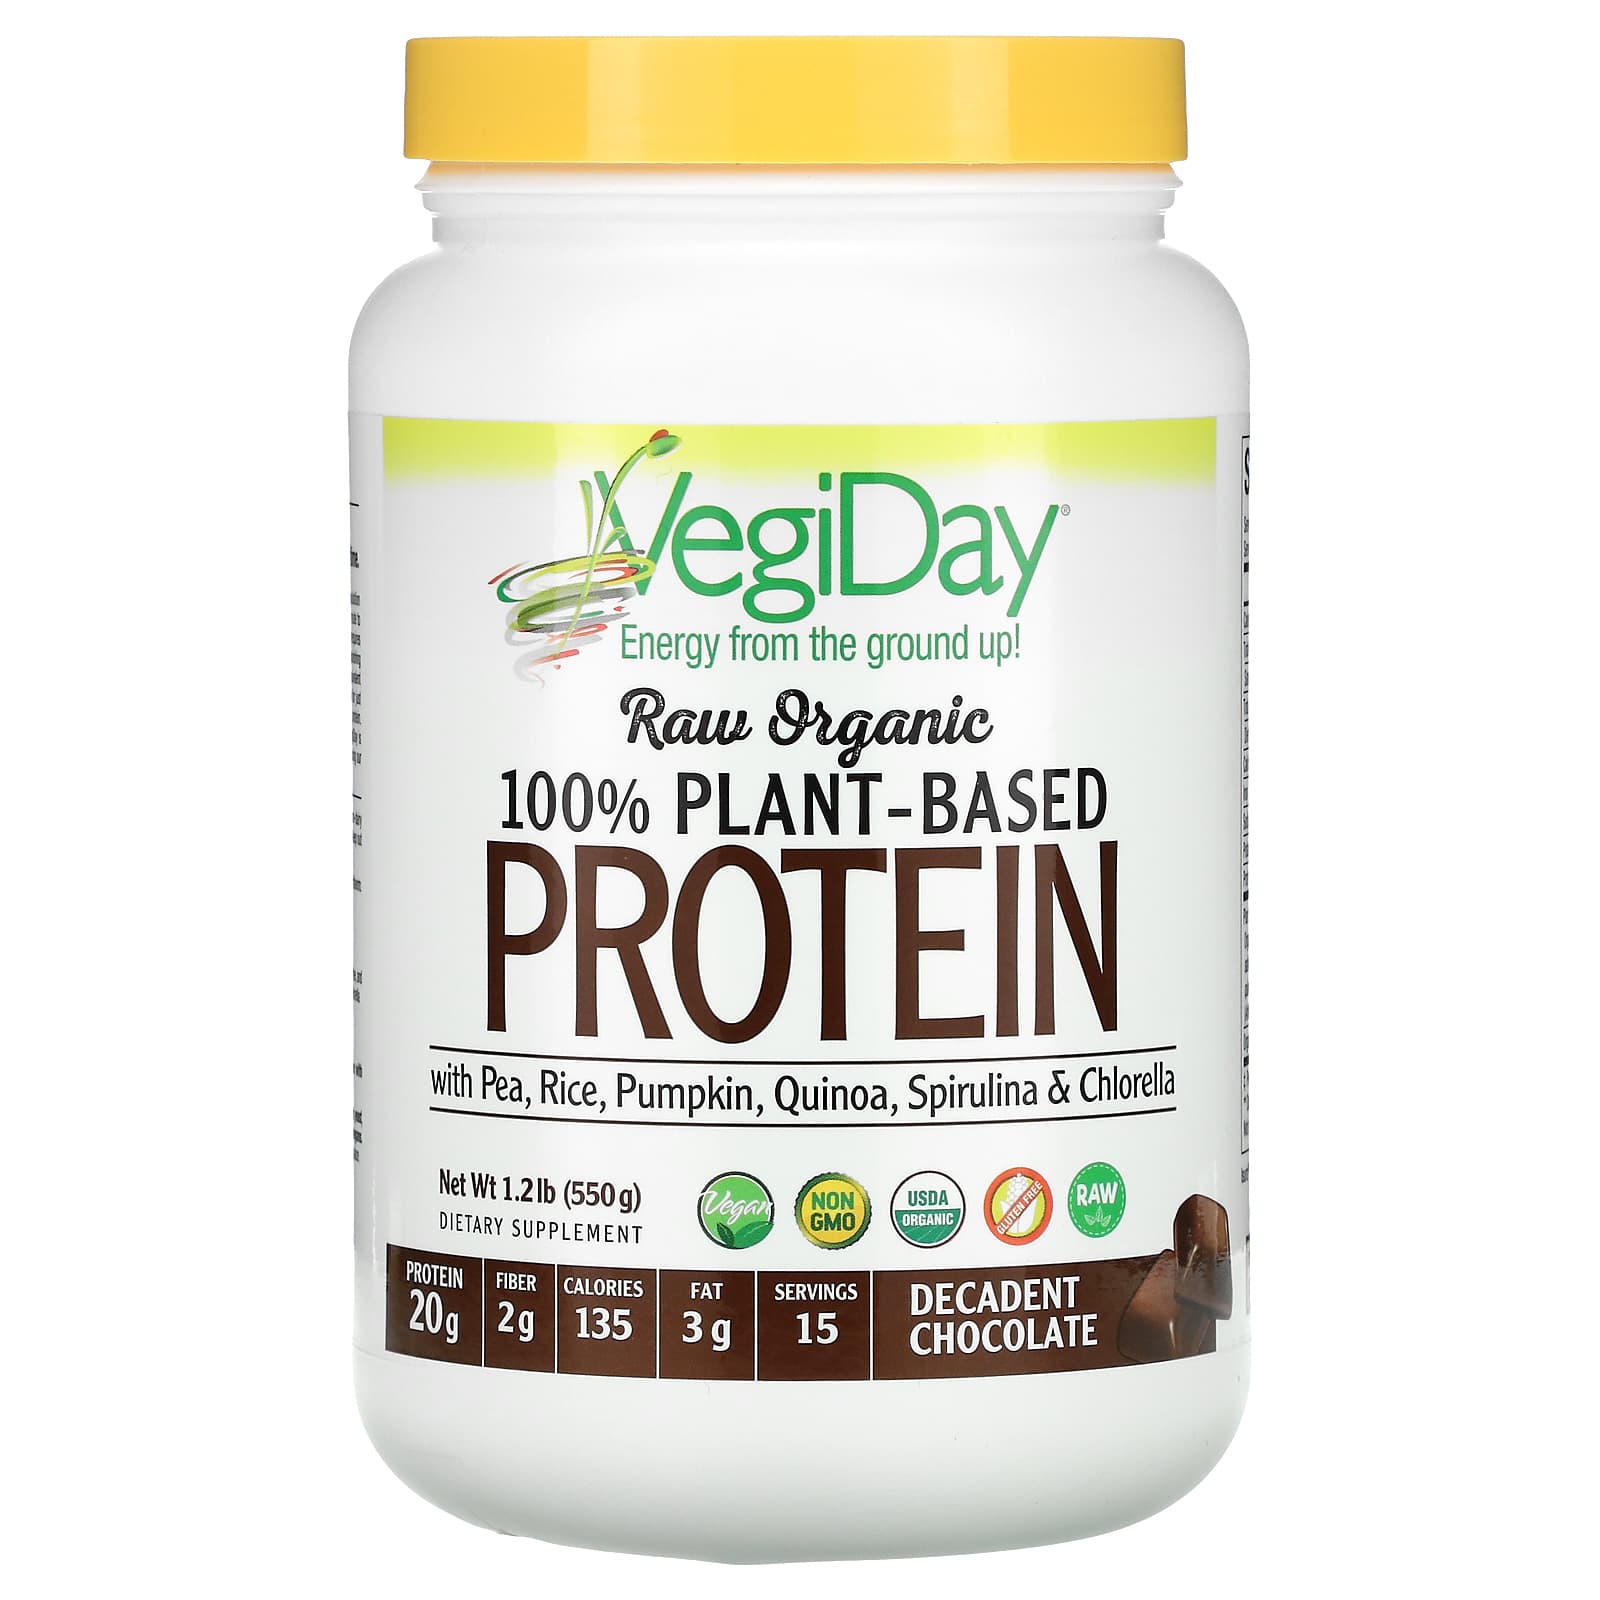 Natural Factors Vegiday Raw Organic 100% Plant-Based Protein – Decadent Chocolate, 17.14 Oz Powder